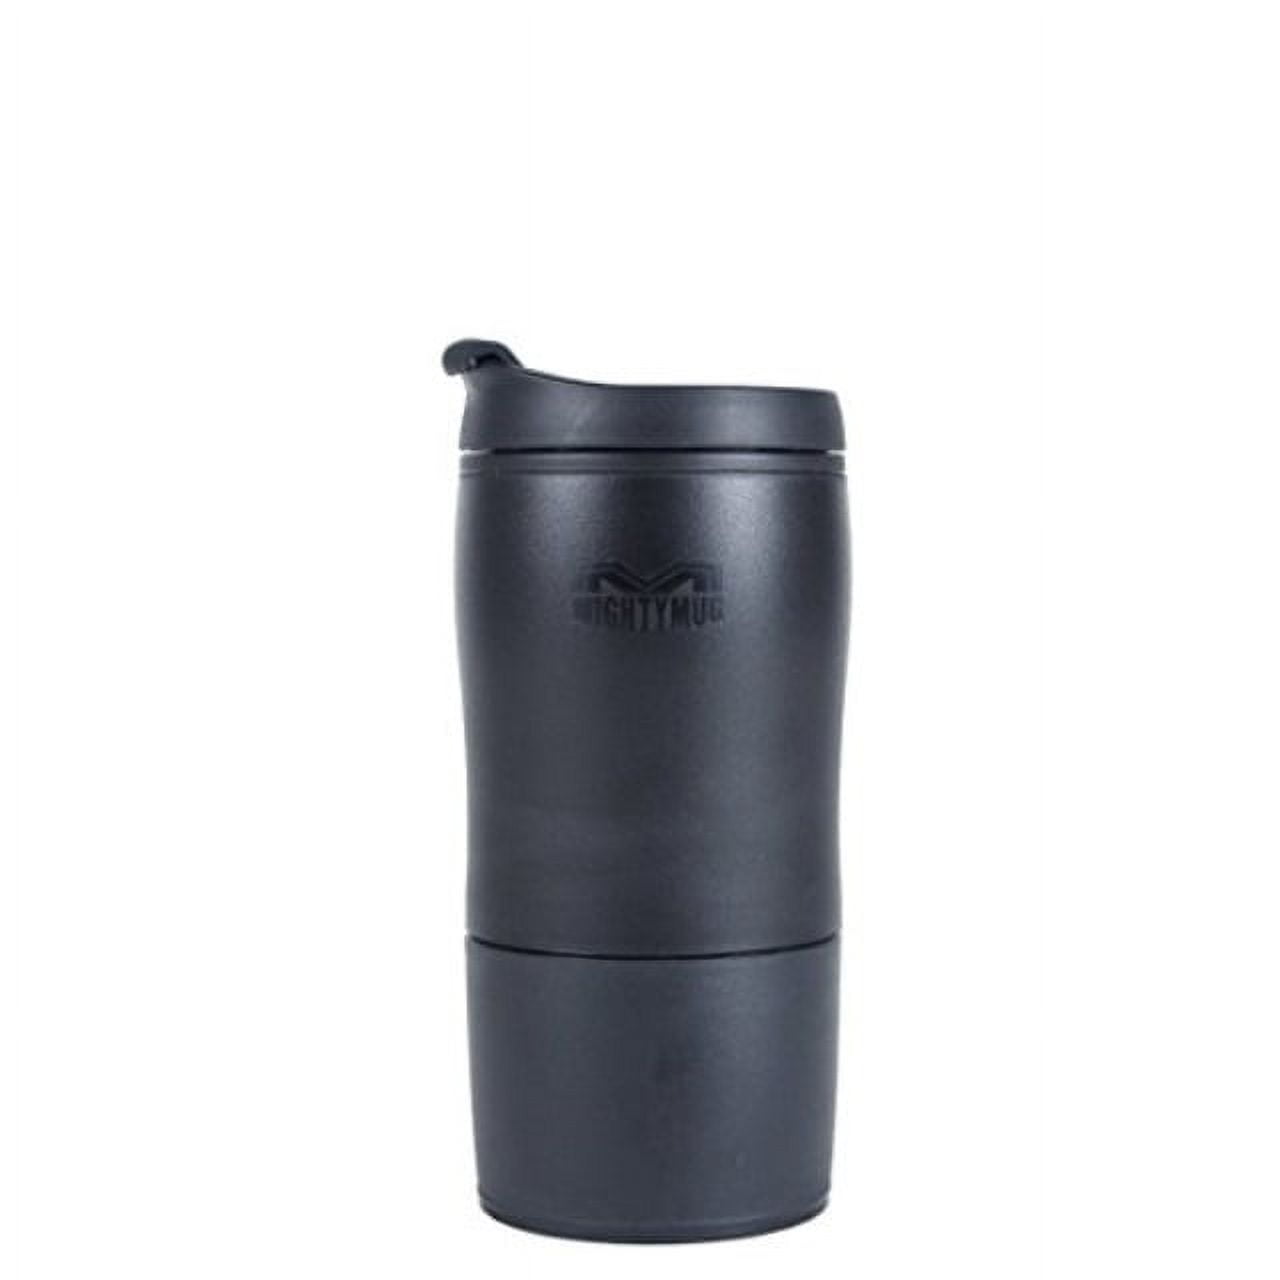 Mighty Mug Mini 11 Oz. Black Single Serve Travel Mug